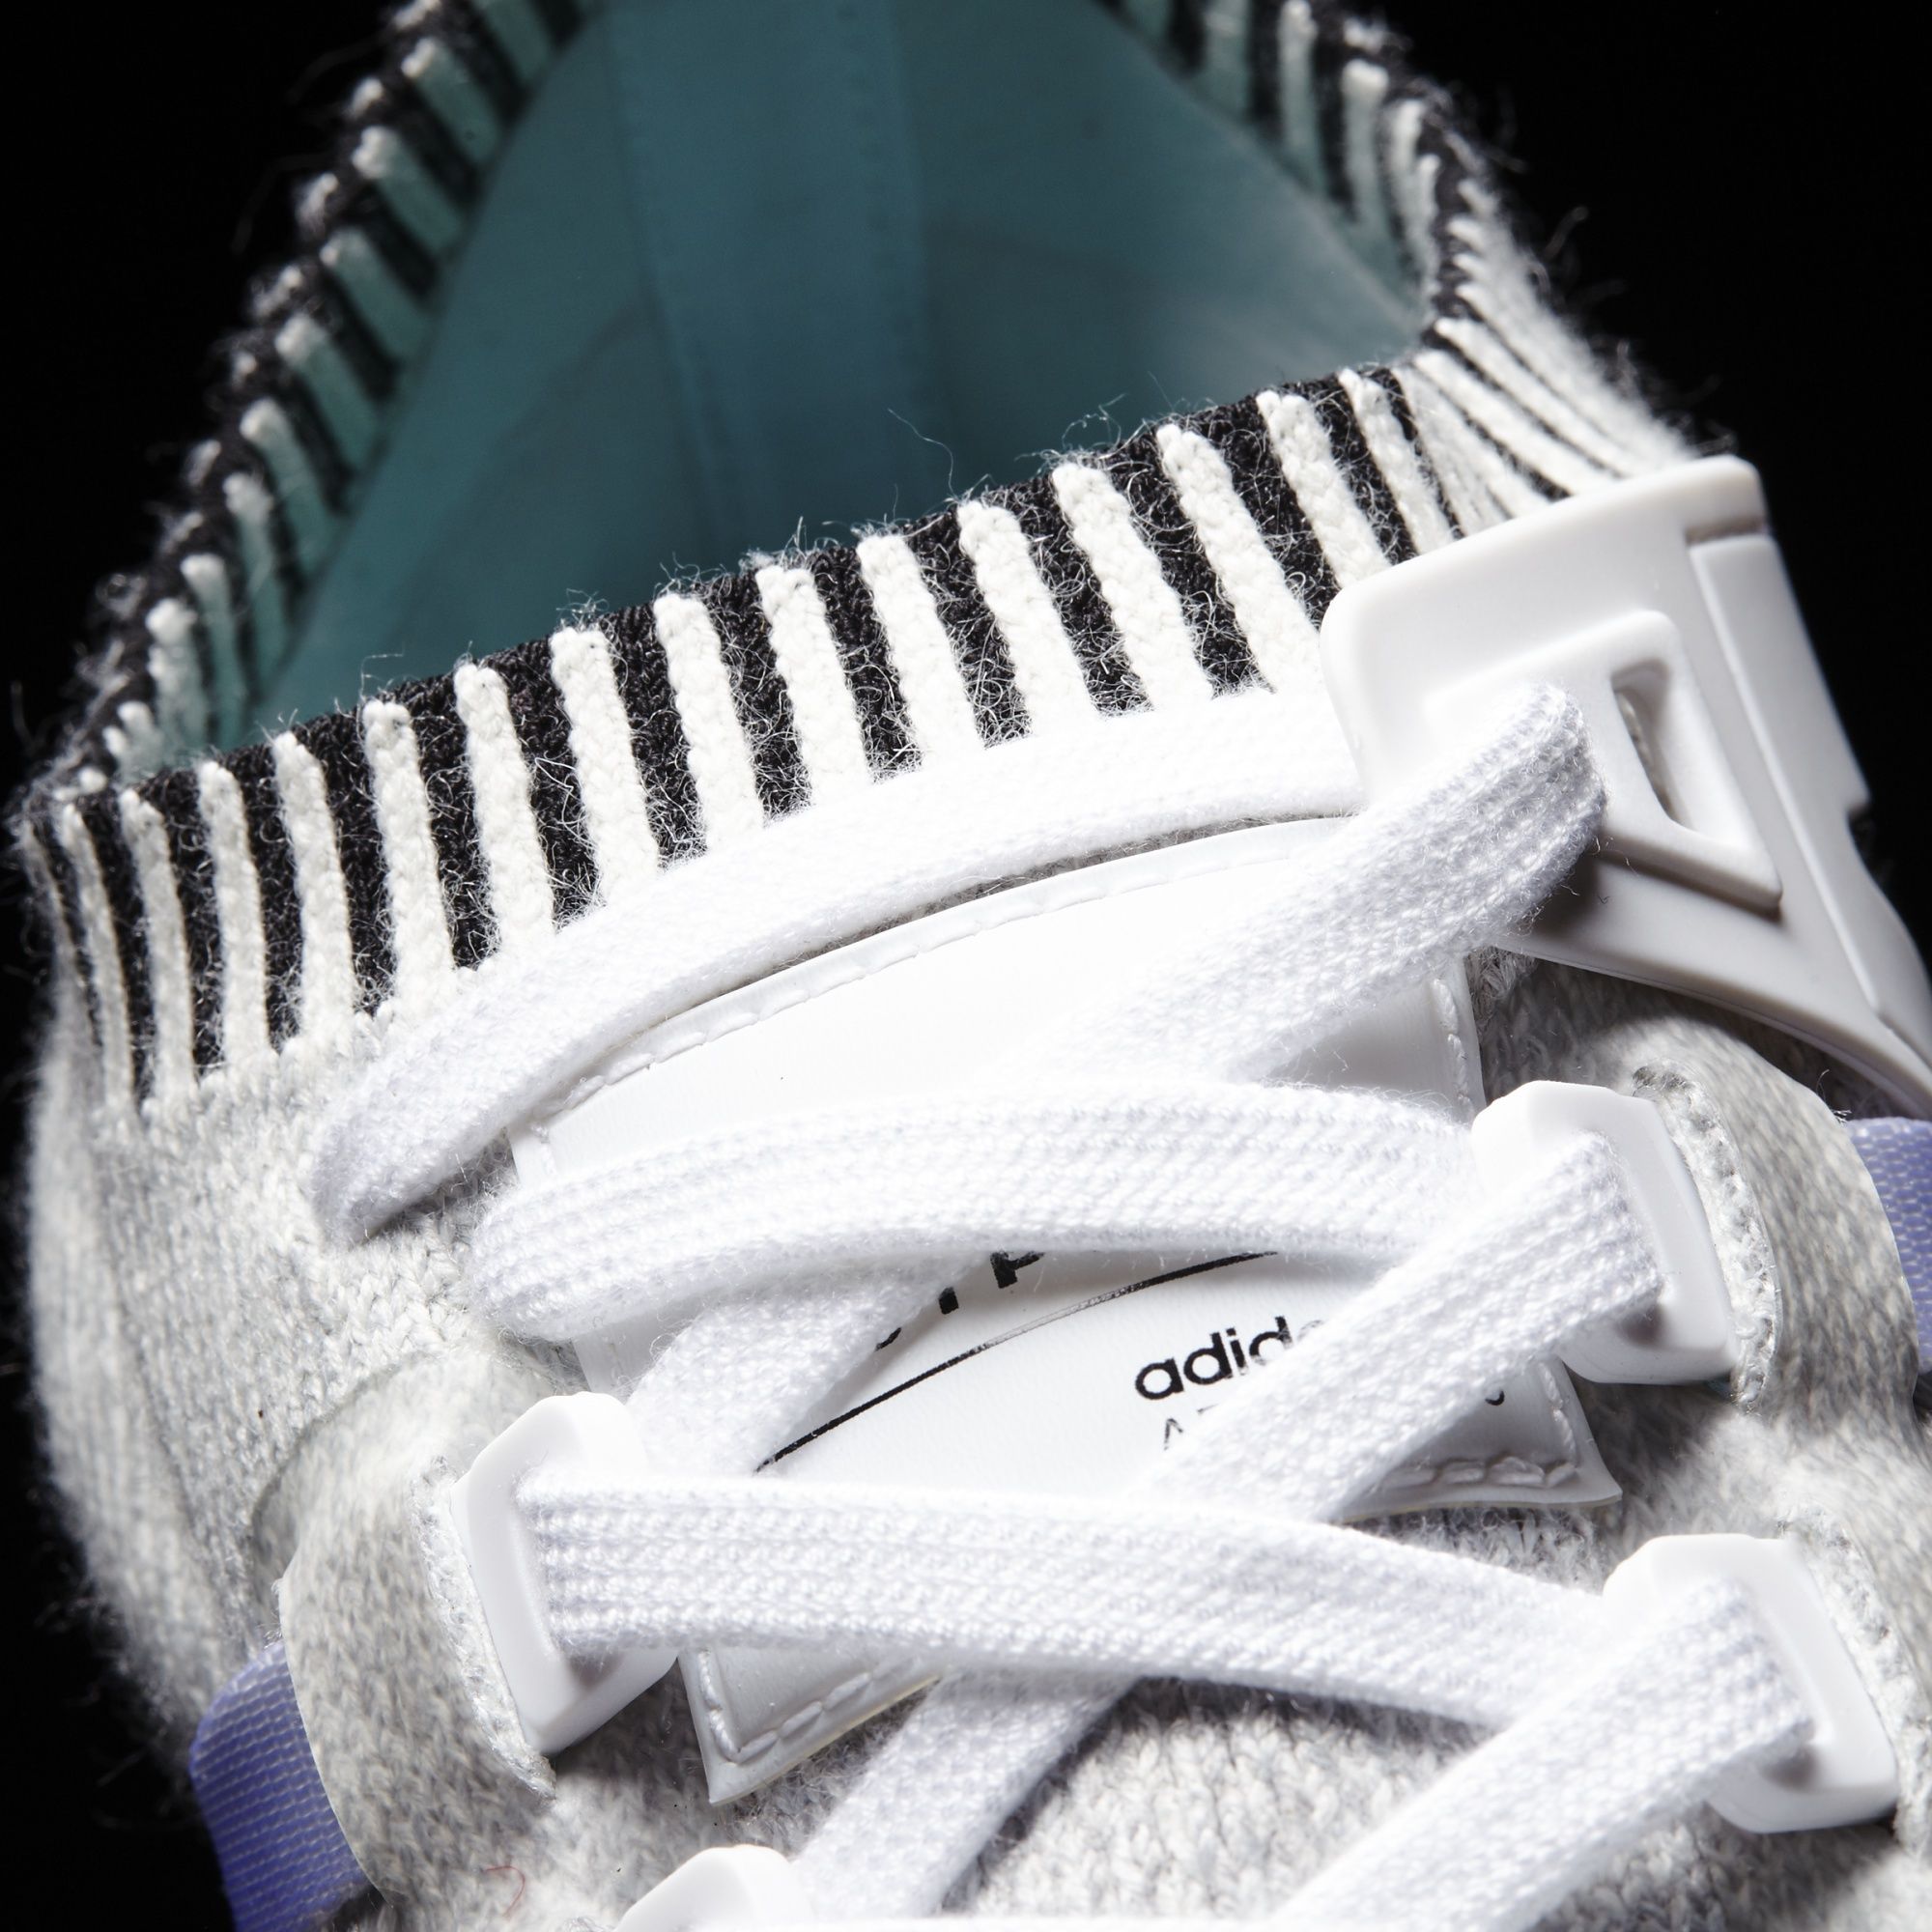 Adidas EQT Support Ultra Primeknit
Vintage White / Footwear White / Core Black